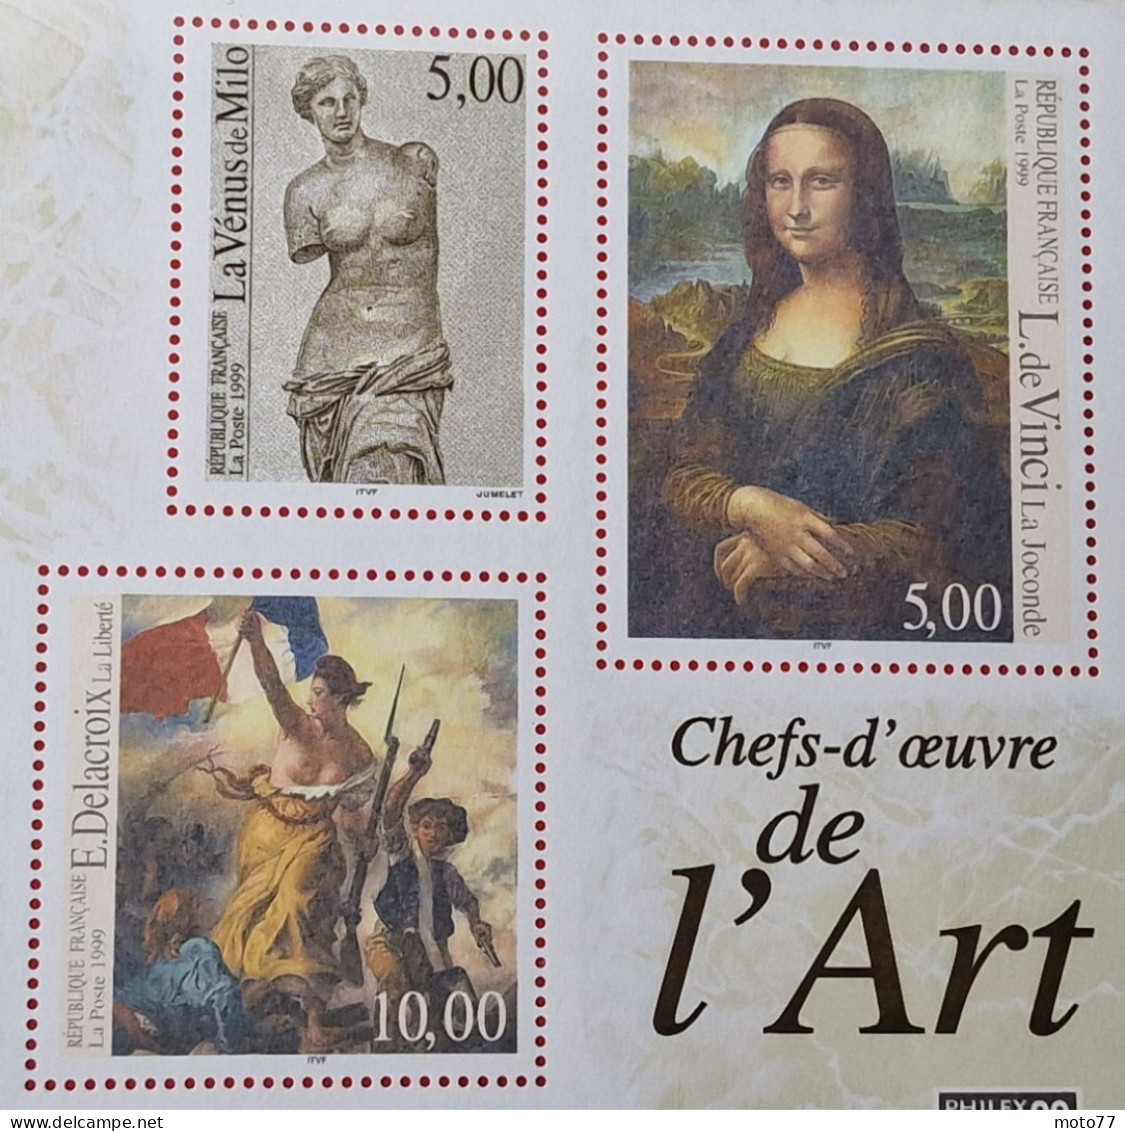 TIMBRE France BLOC FEUILLET 23 version BLEU neuf - 1999 timbres 3234 3235 3236 - Yvert & Tellier 2003 coté + de 35 €